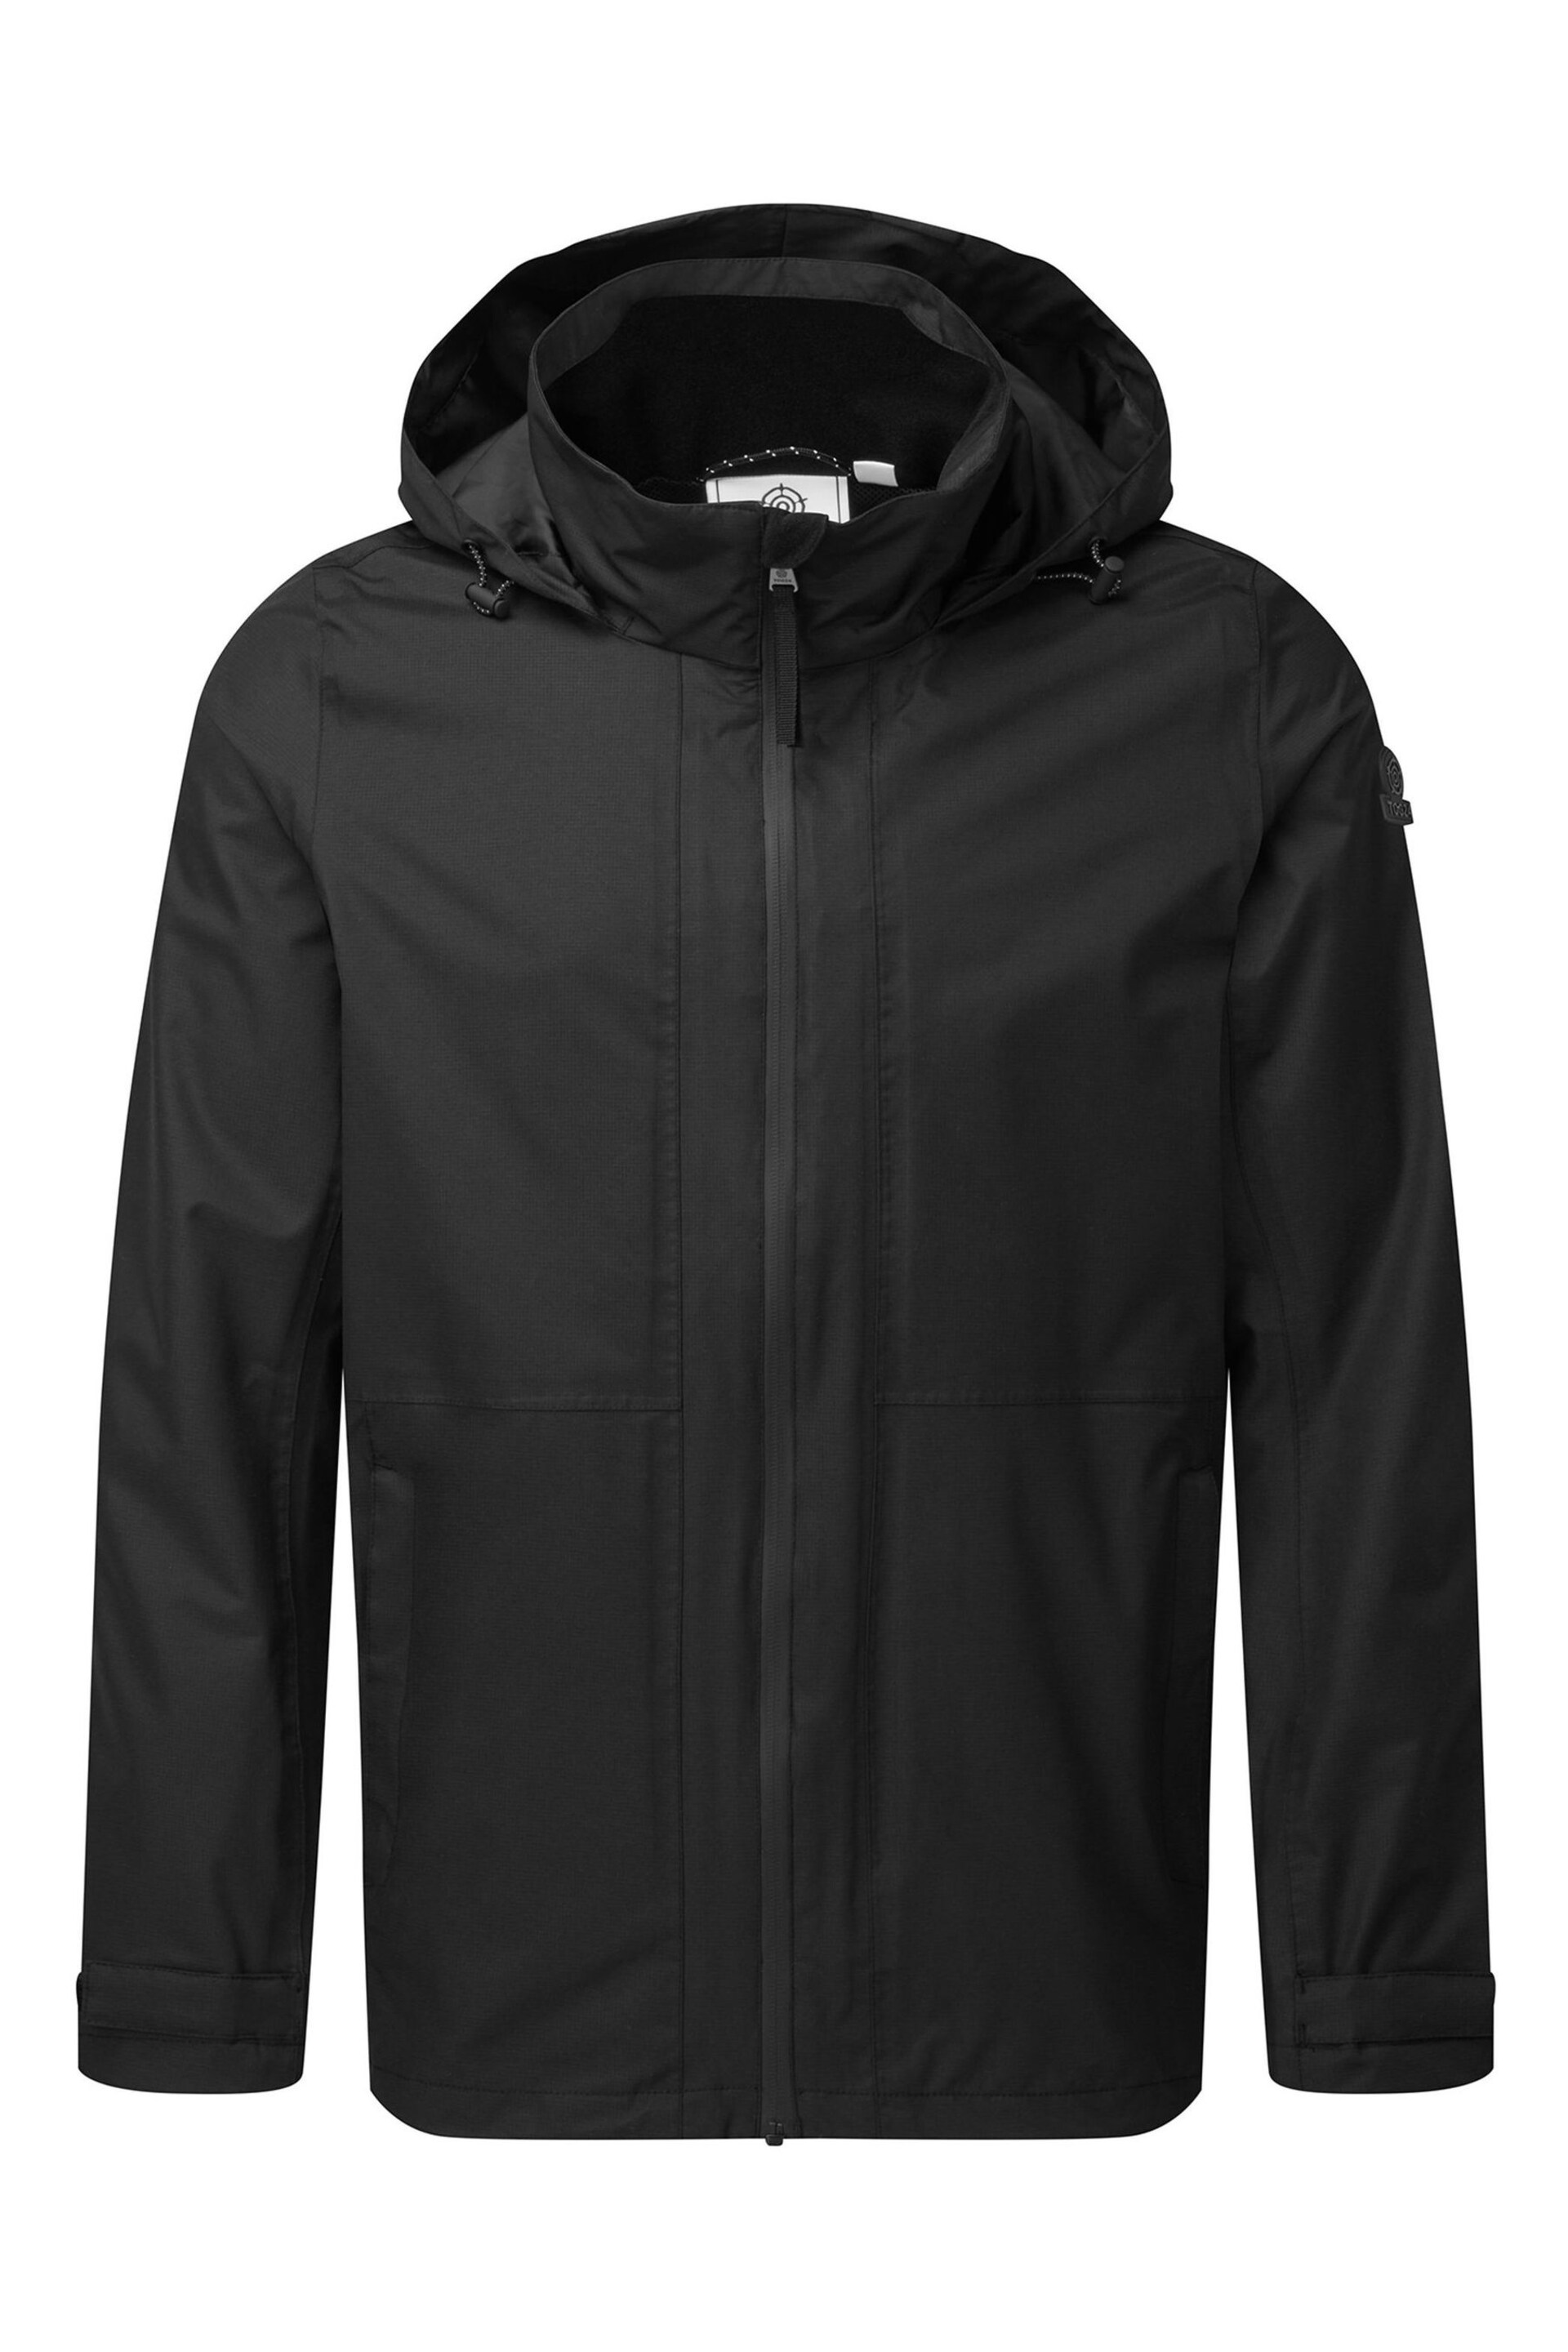 Tog 24 Black Gribton Waterproof Jacket - Image 4 of 4